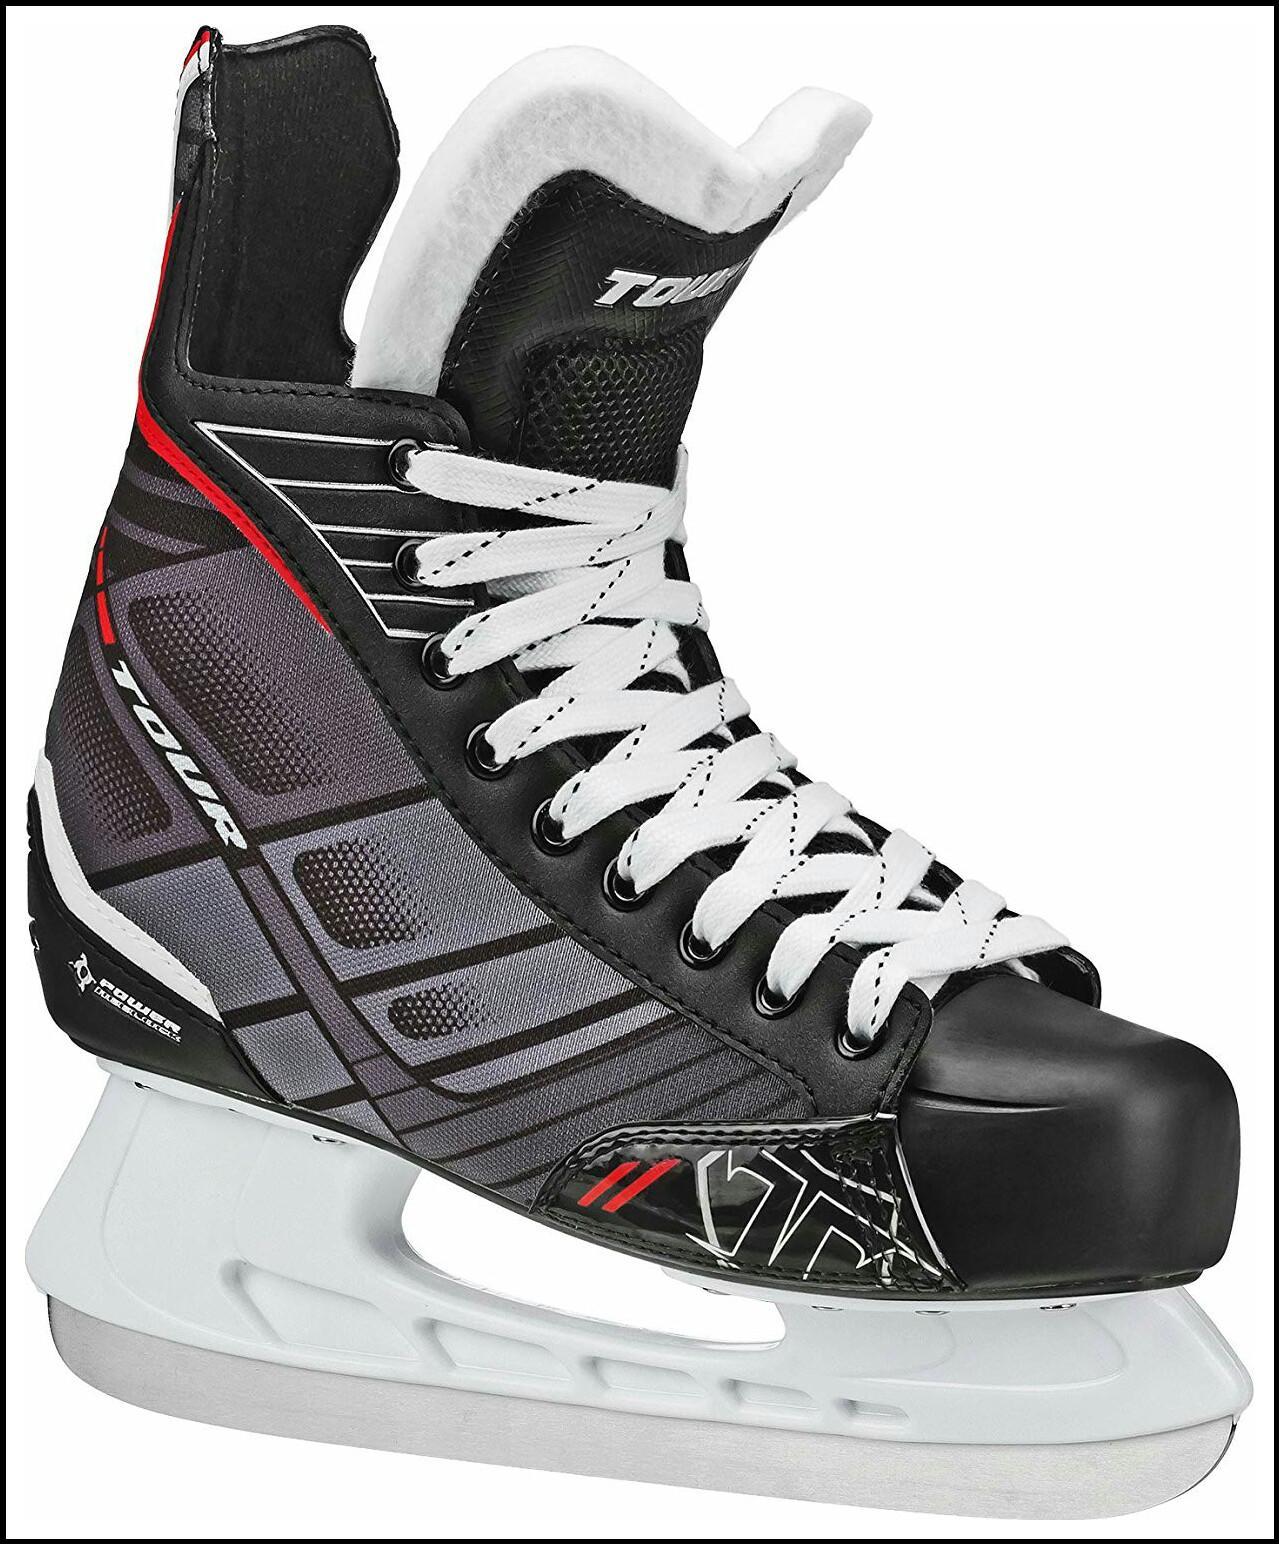 Tour Hockey Senior FB 225 Ice Hockey Skates - XLT54